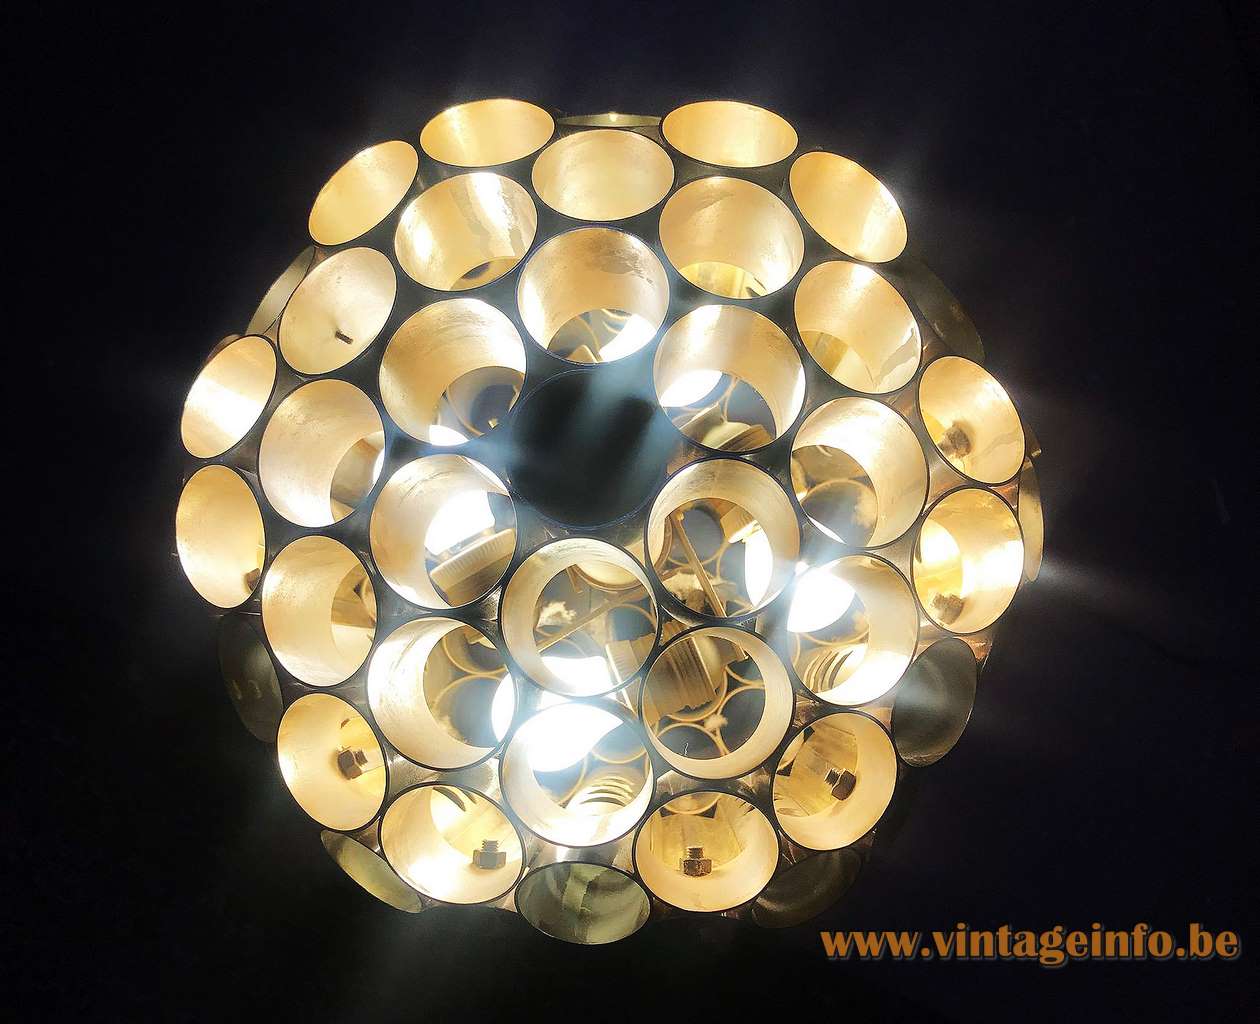 Michel Armand Morille table lamp gilded metal mushroom tubes Canada design Maison Charles France E27 sockets